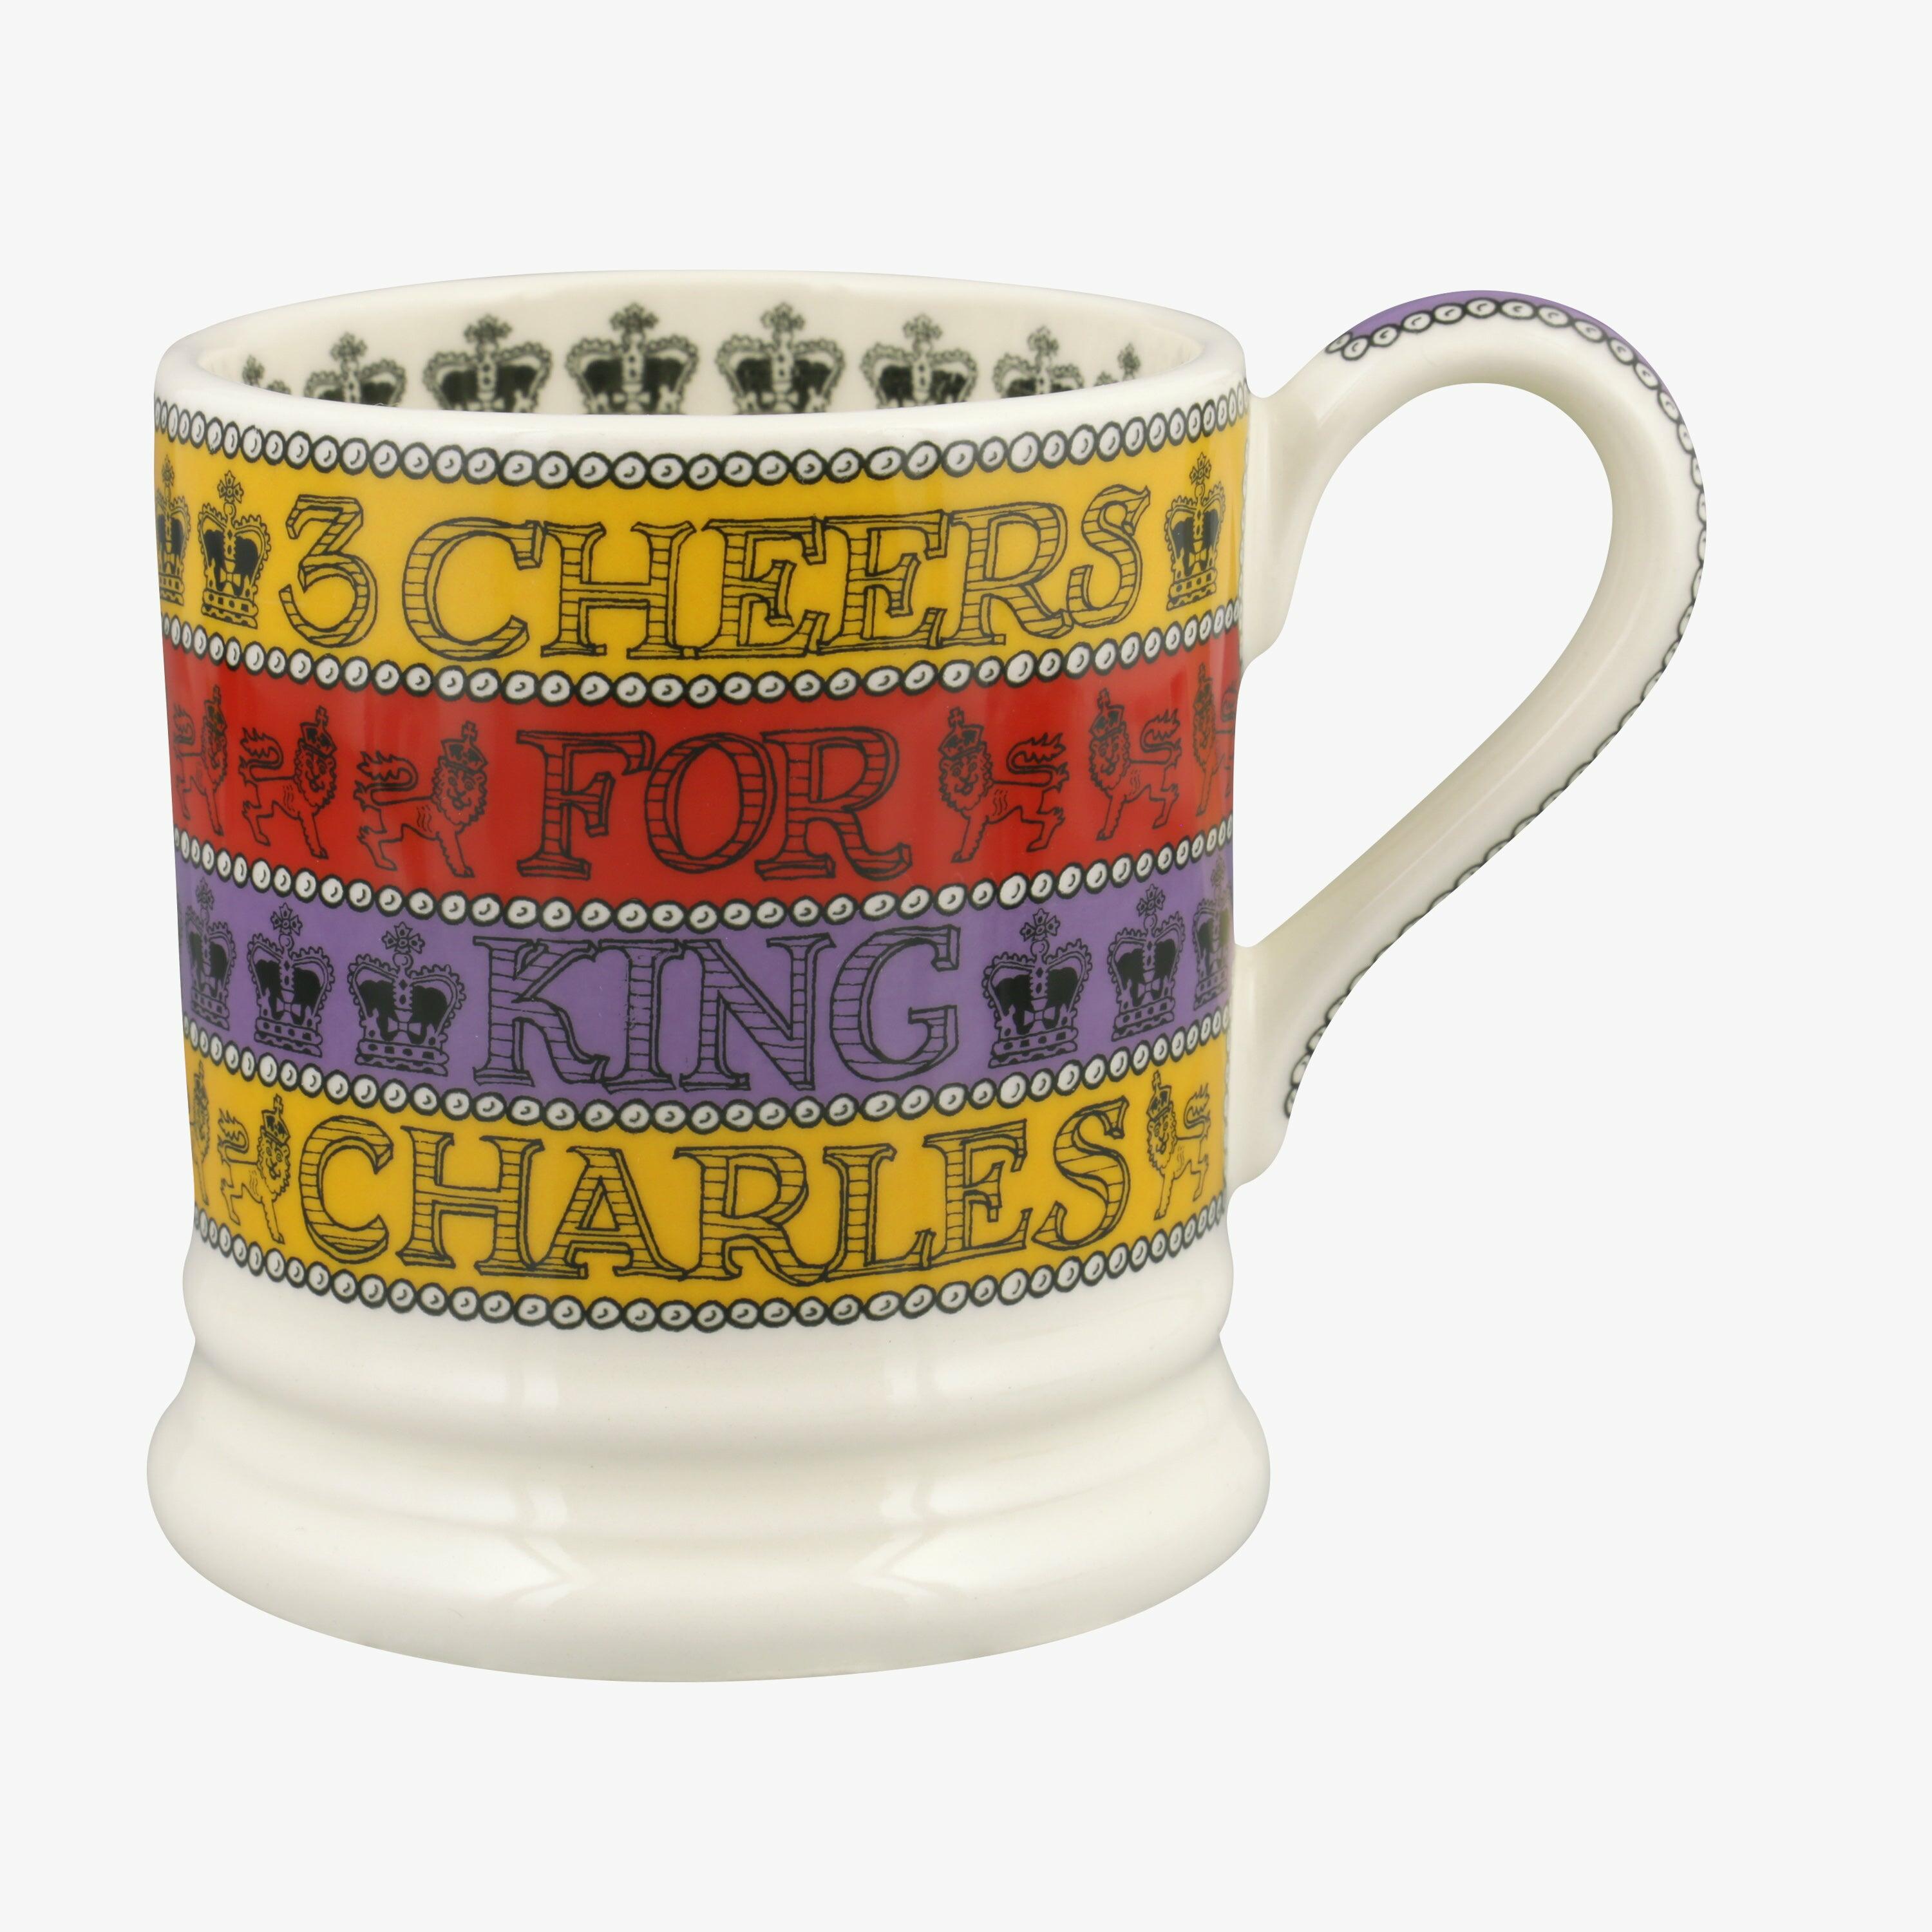 Emma Bridgewater  3 Cheers For King Charles III 1/2 Pint Mug - Unique Handmade & Handpainted English Earthenware Tea/Coffee Mug